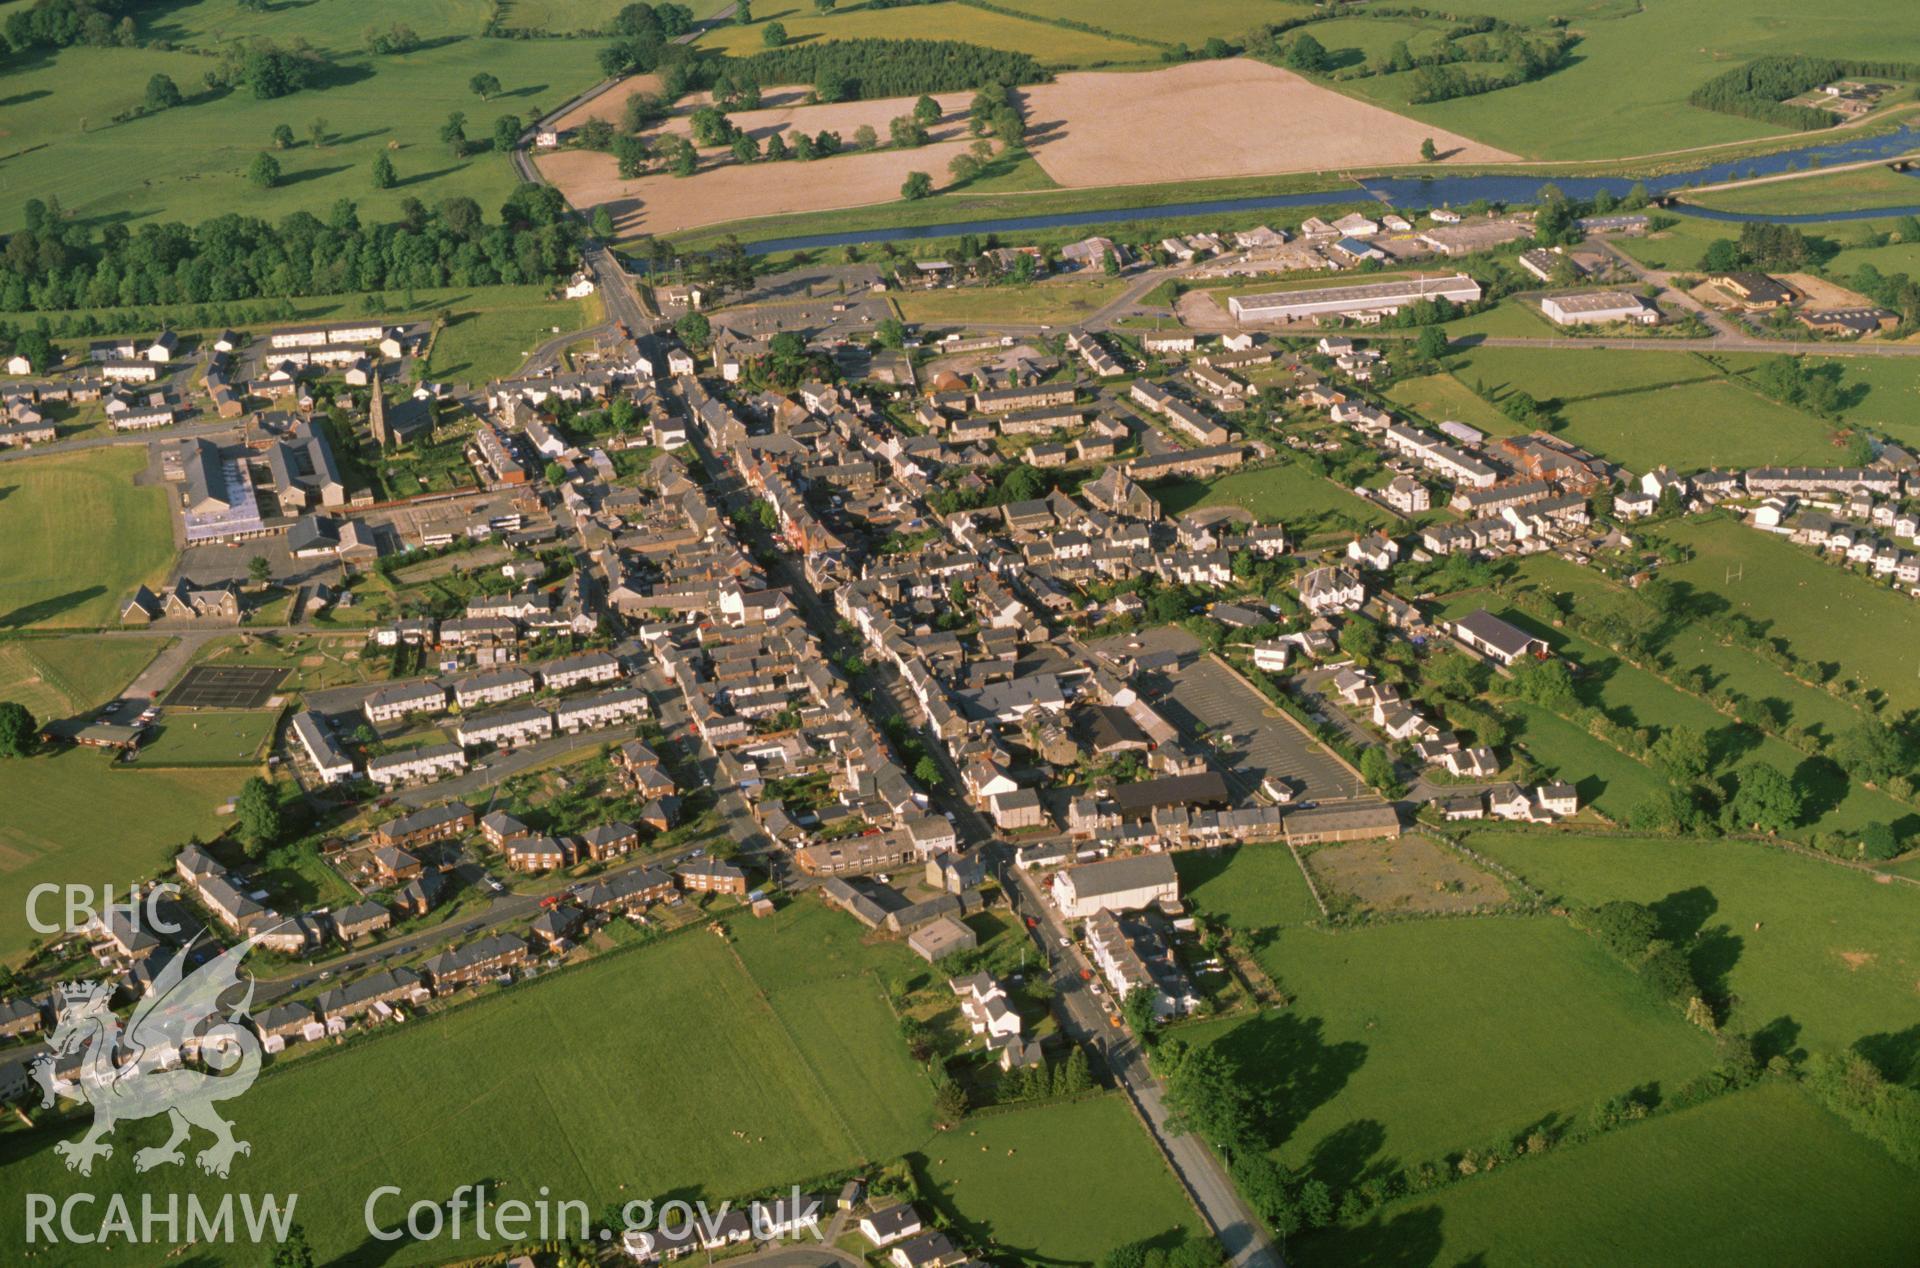 Slide of RCAHMW colour oblique aerial photograph of Bala Borough, taken by C.R. Musson, 7/6/1989.